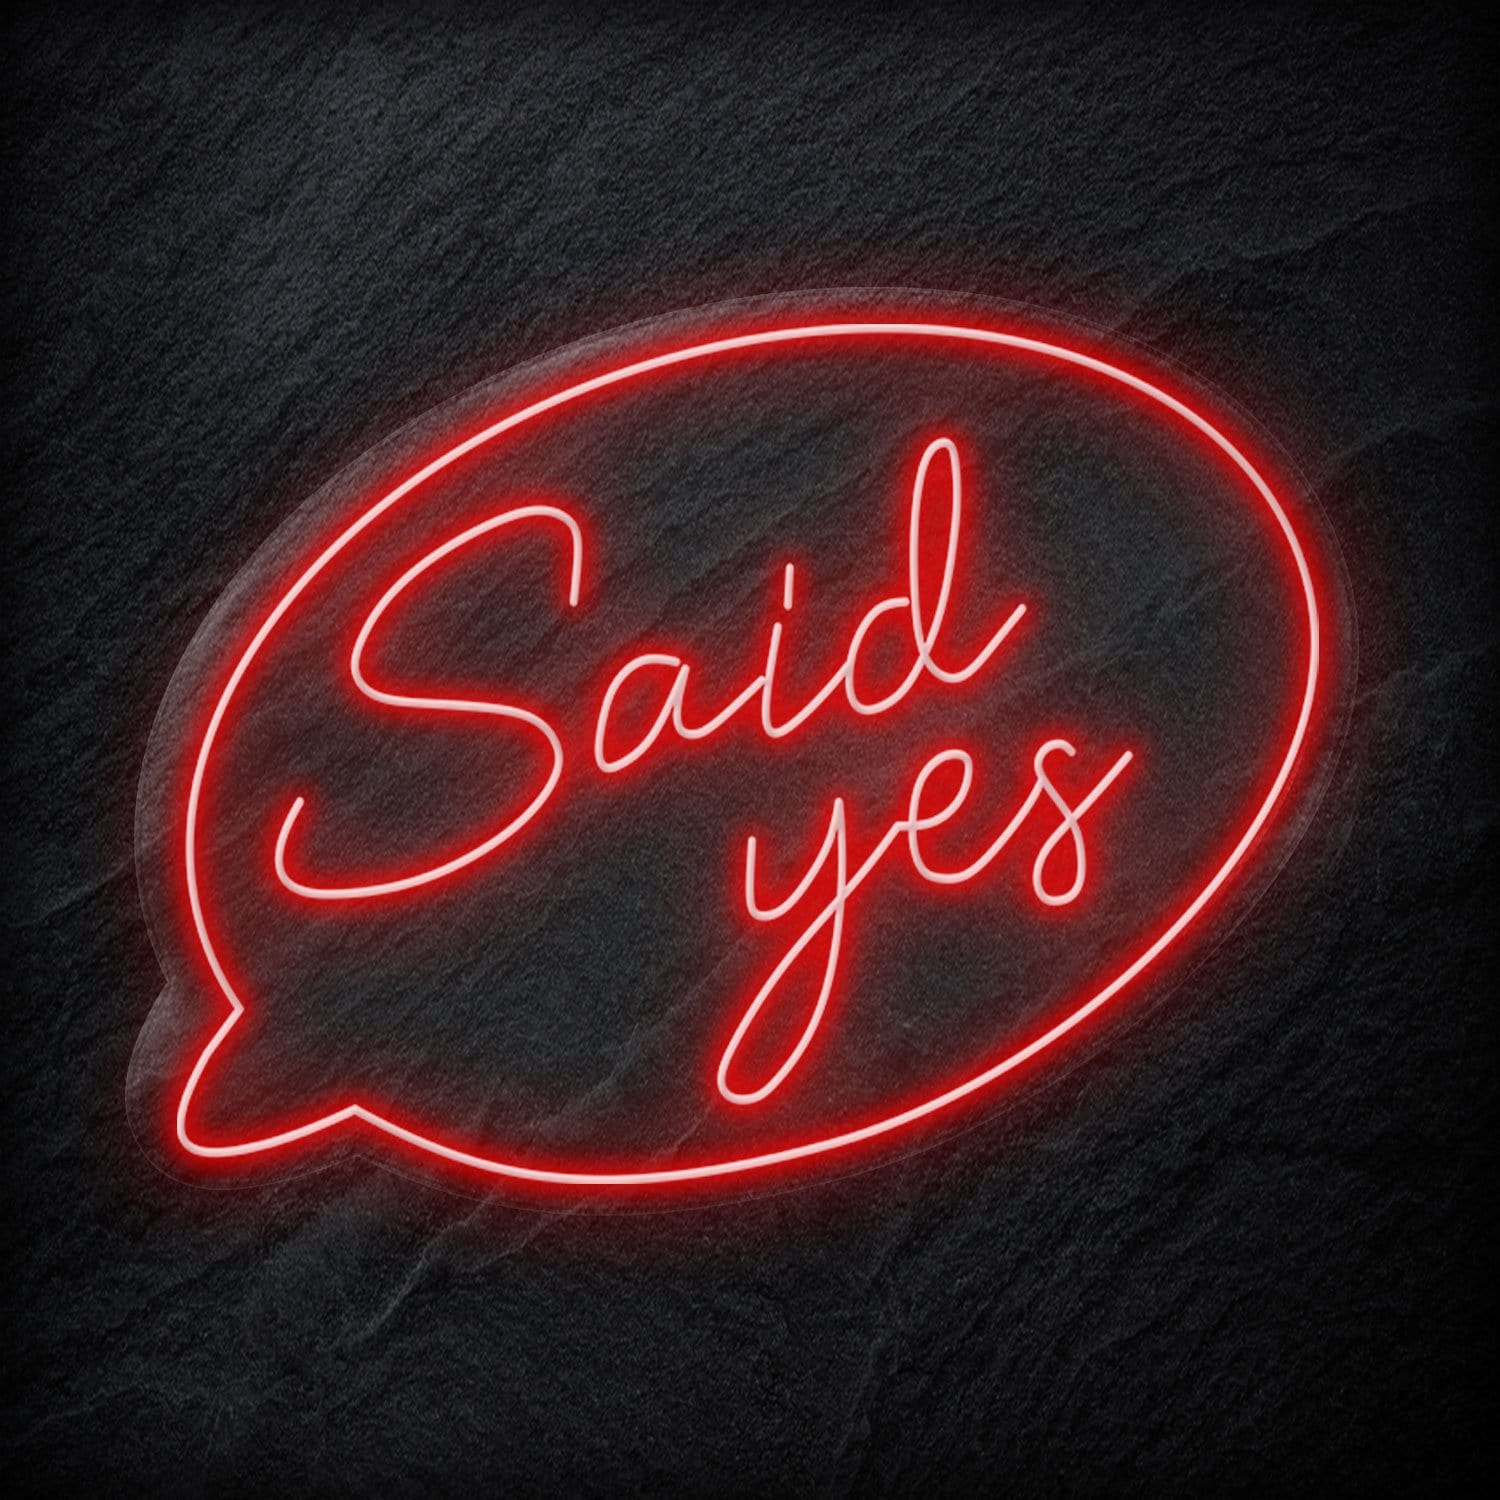 " Said Yes" LED Neonschild - NEONEVERGLOW